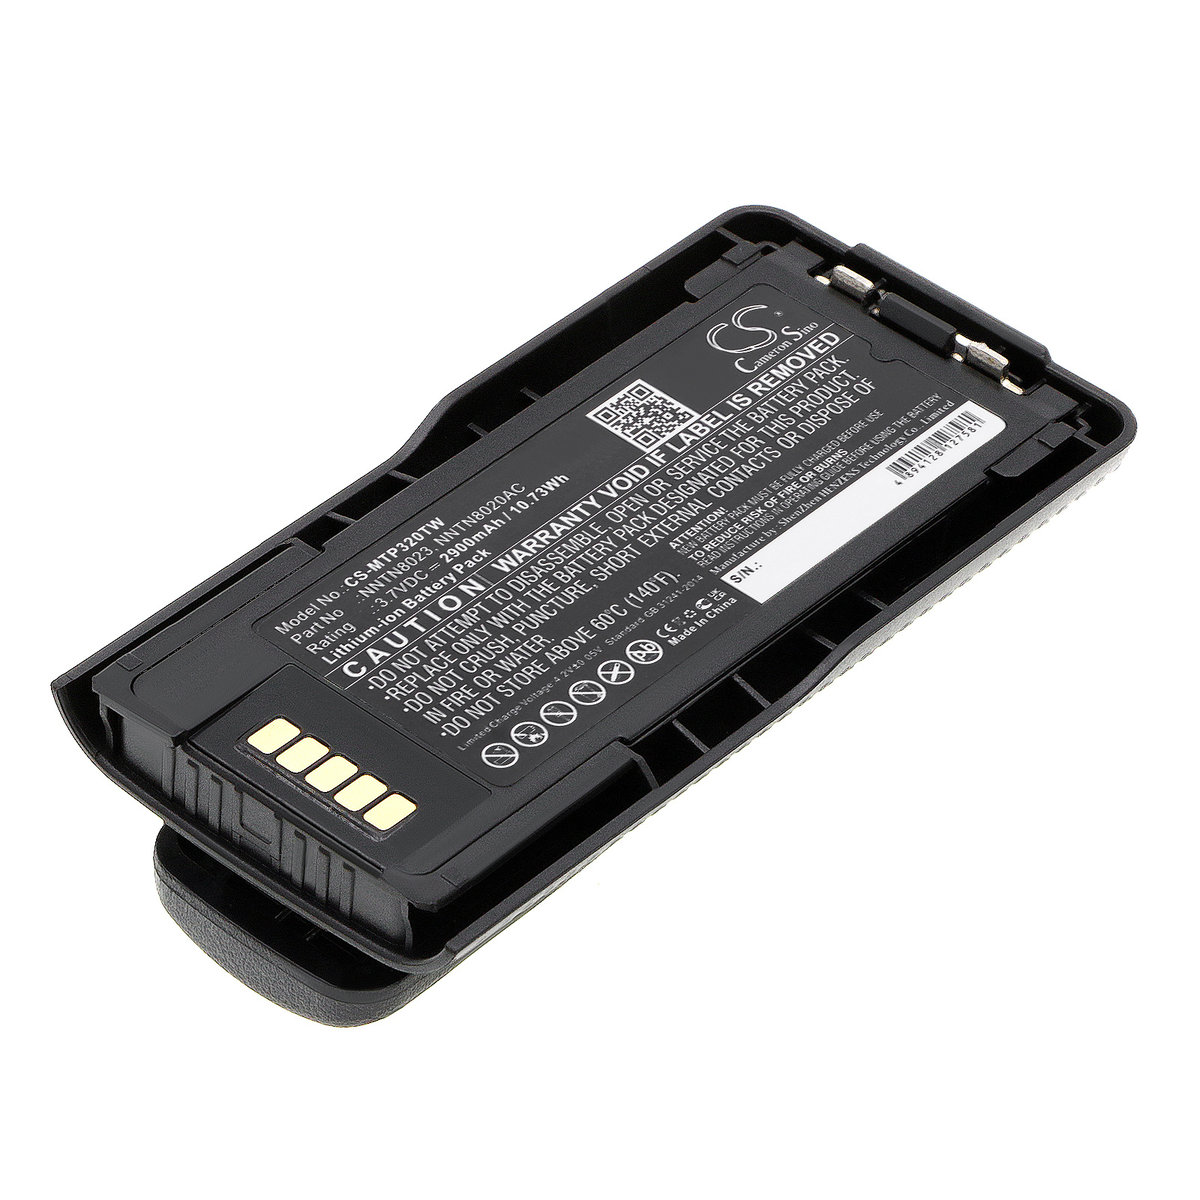 Zdjęcia - Bateria / akumulator Bateria Zamienna Motorola Nntn8023 3,7V 2900Mah Li-Ion Do Mtp3200 Mtp3250